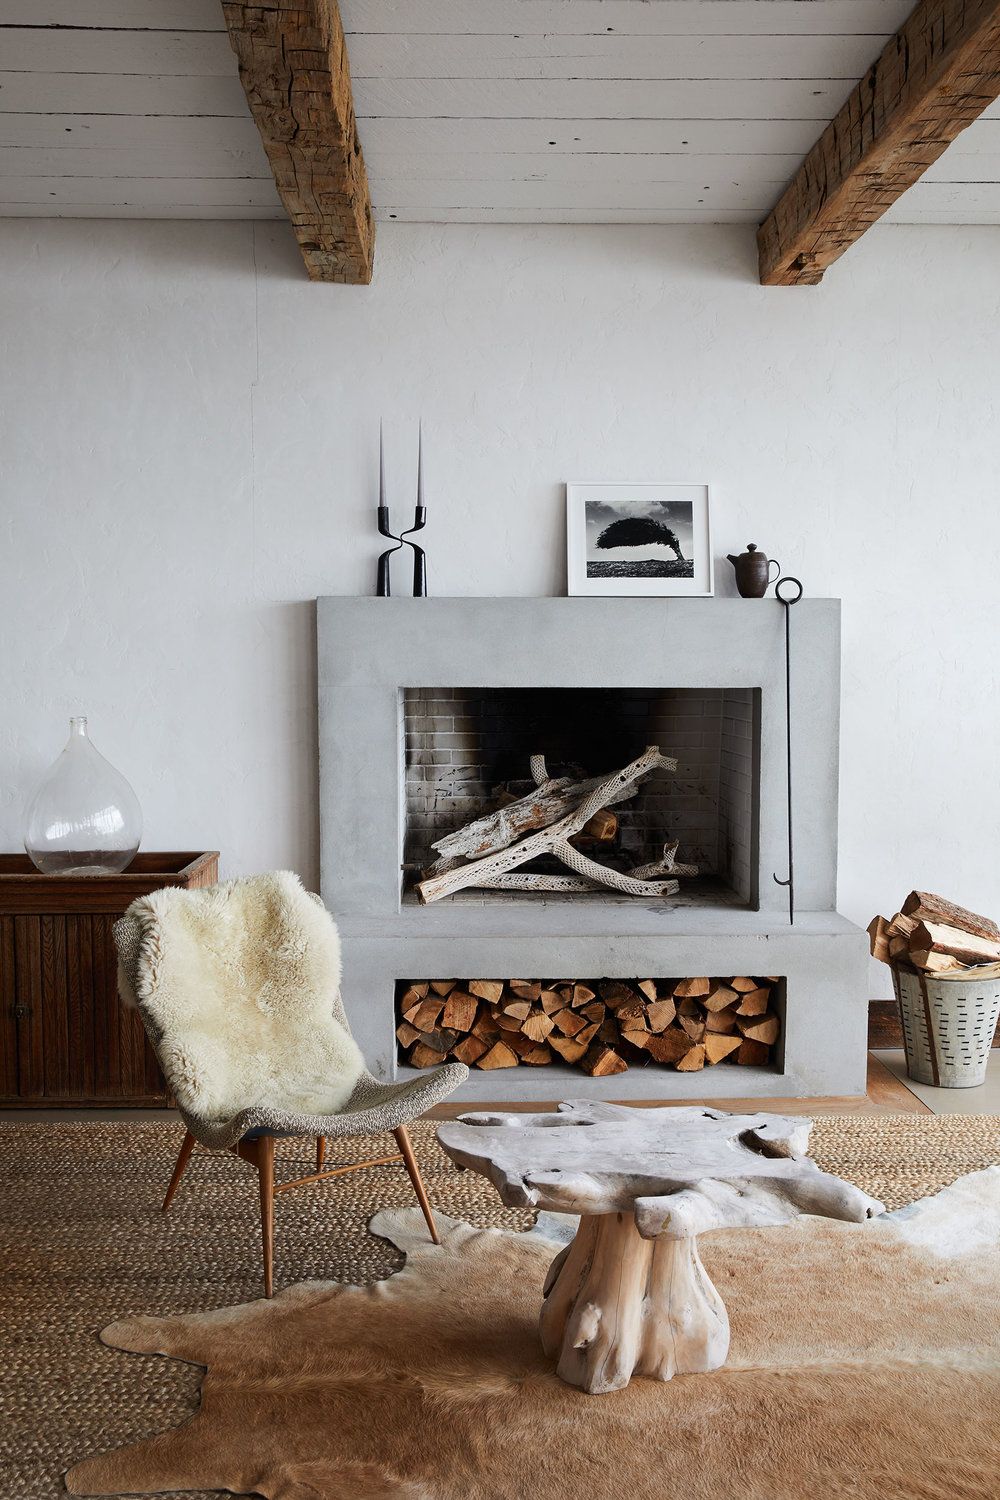 20 Best Fireplace Ideas   Stylish Indoor Fireplace Designs, Decor ...